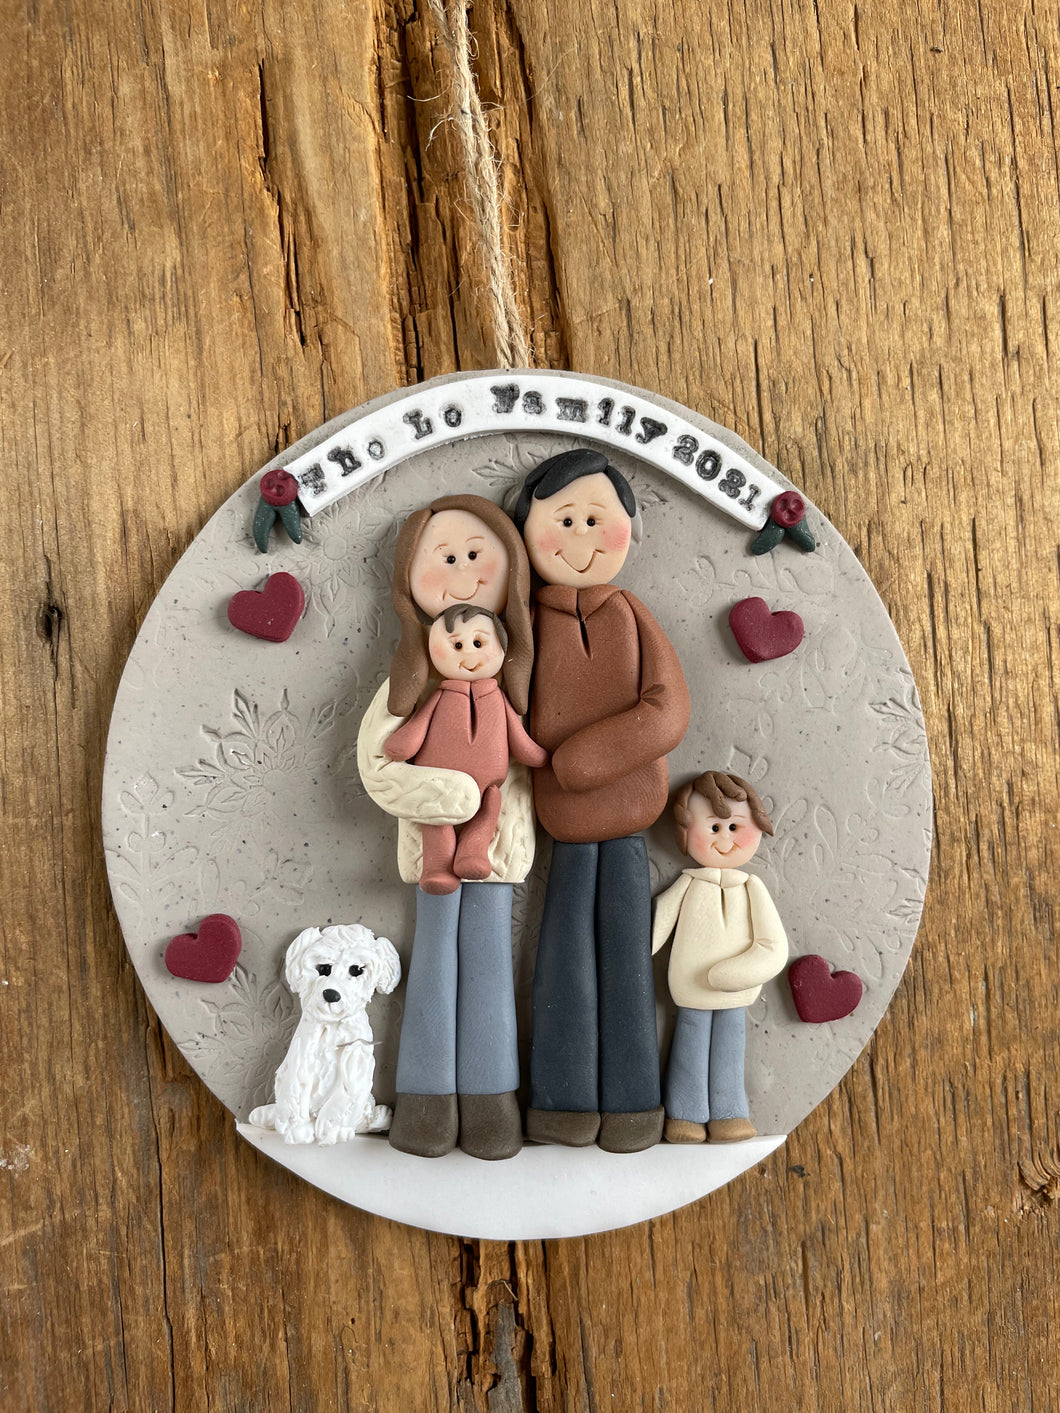 5 Member custom clay family portrait Christmas ornament